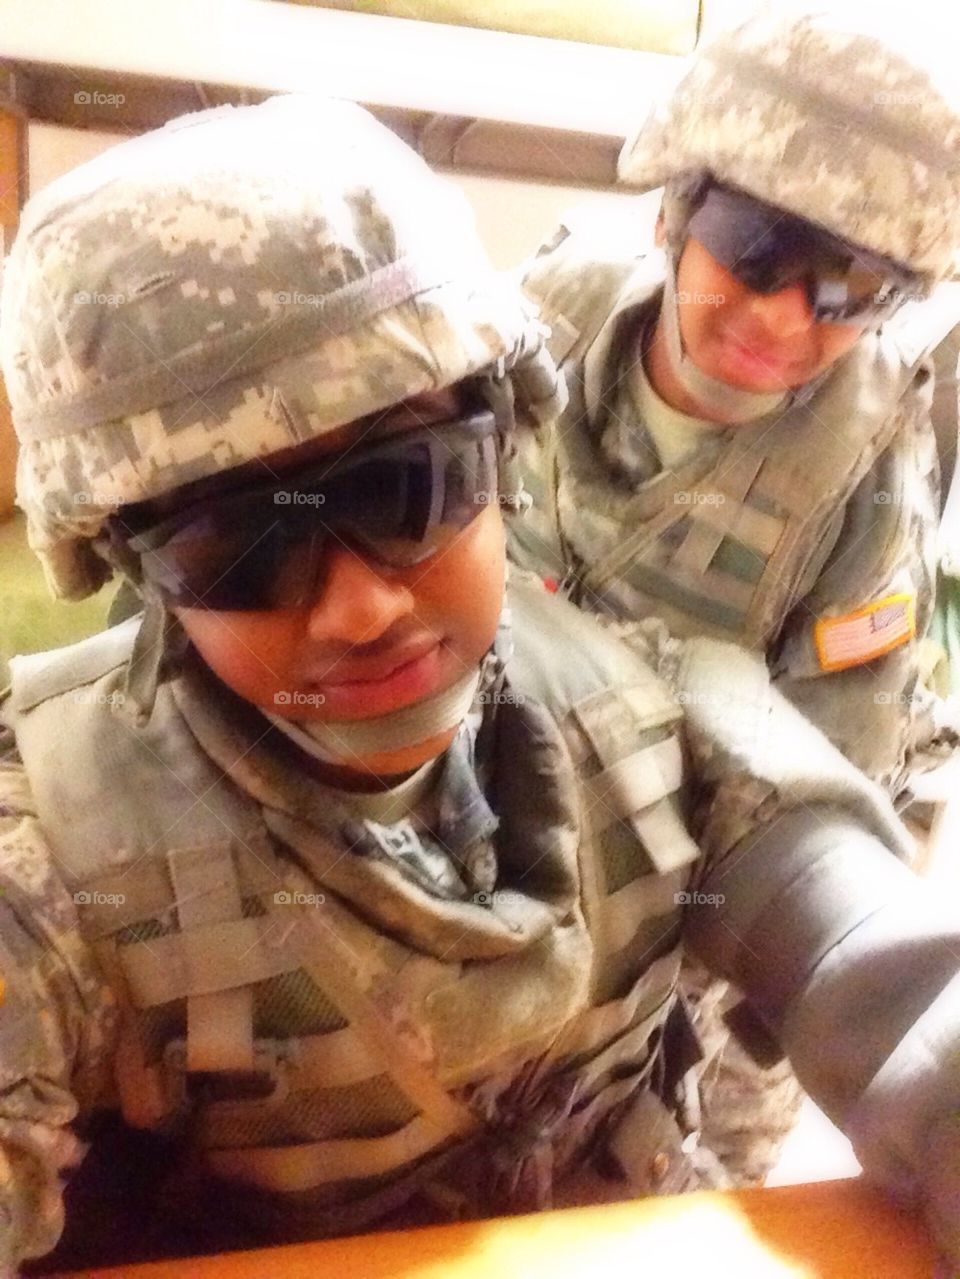 Army women